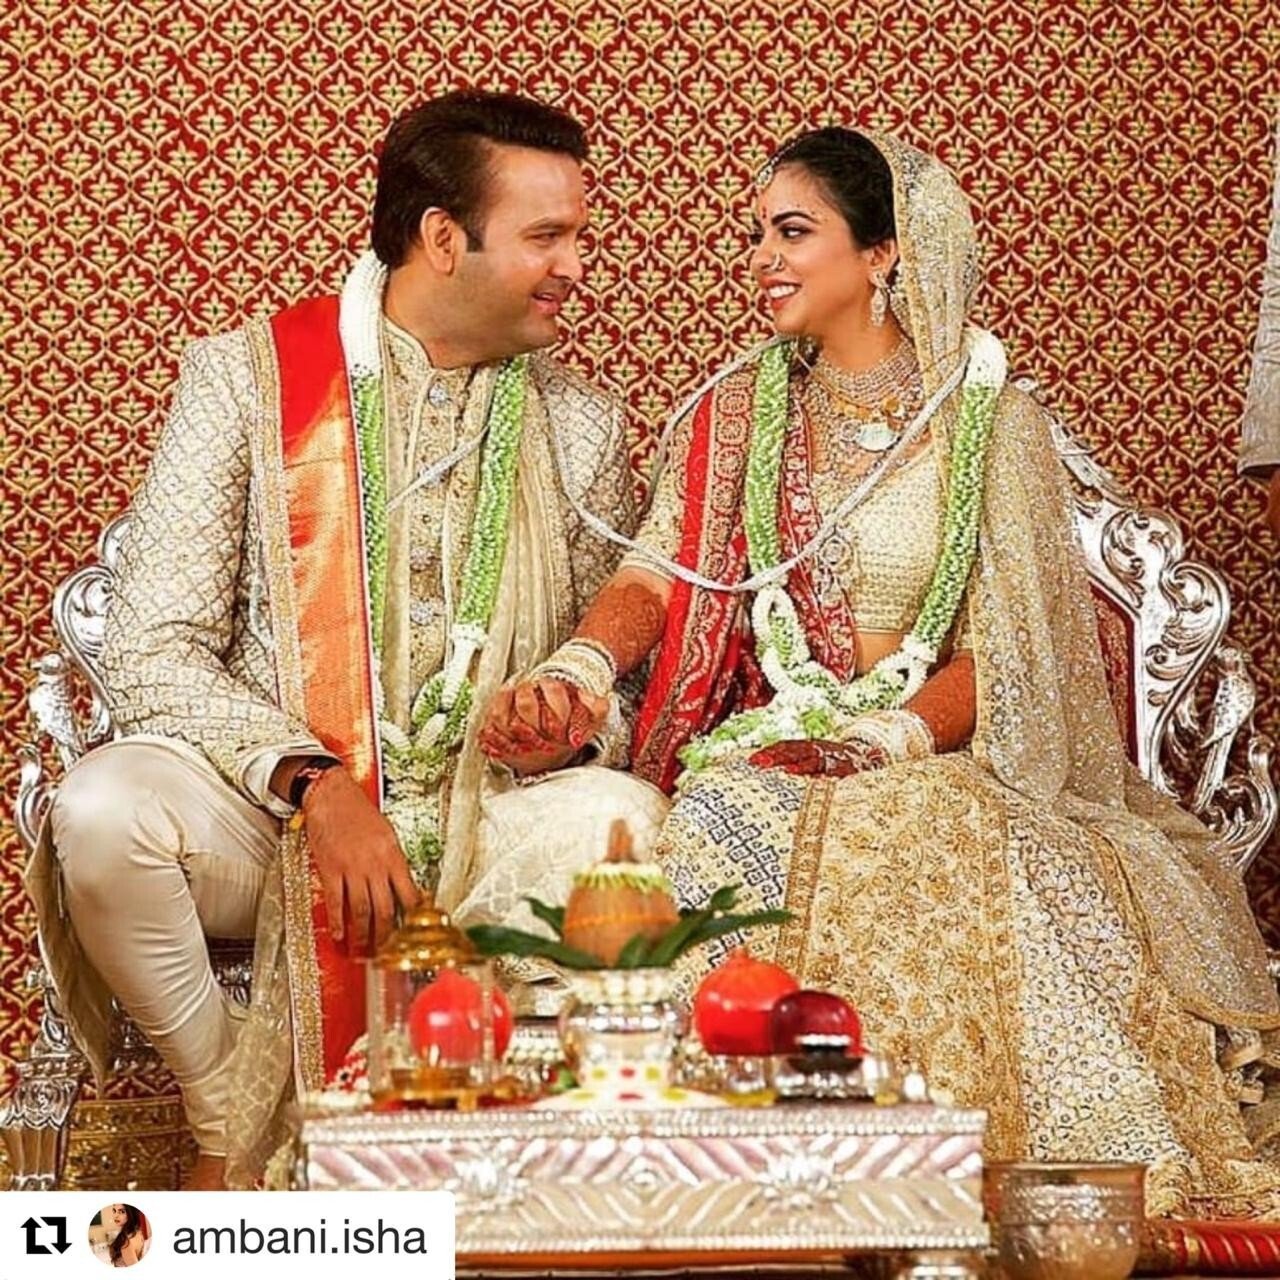 The US$100 million wedding — between Anand Piramal and Isha Ambani. Photo: @WforWoman/Twitter